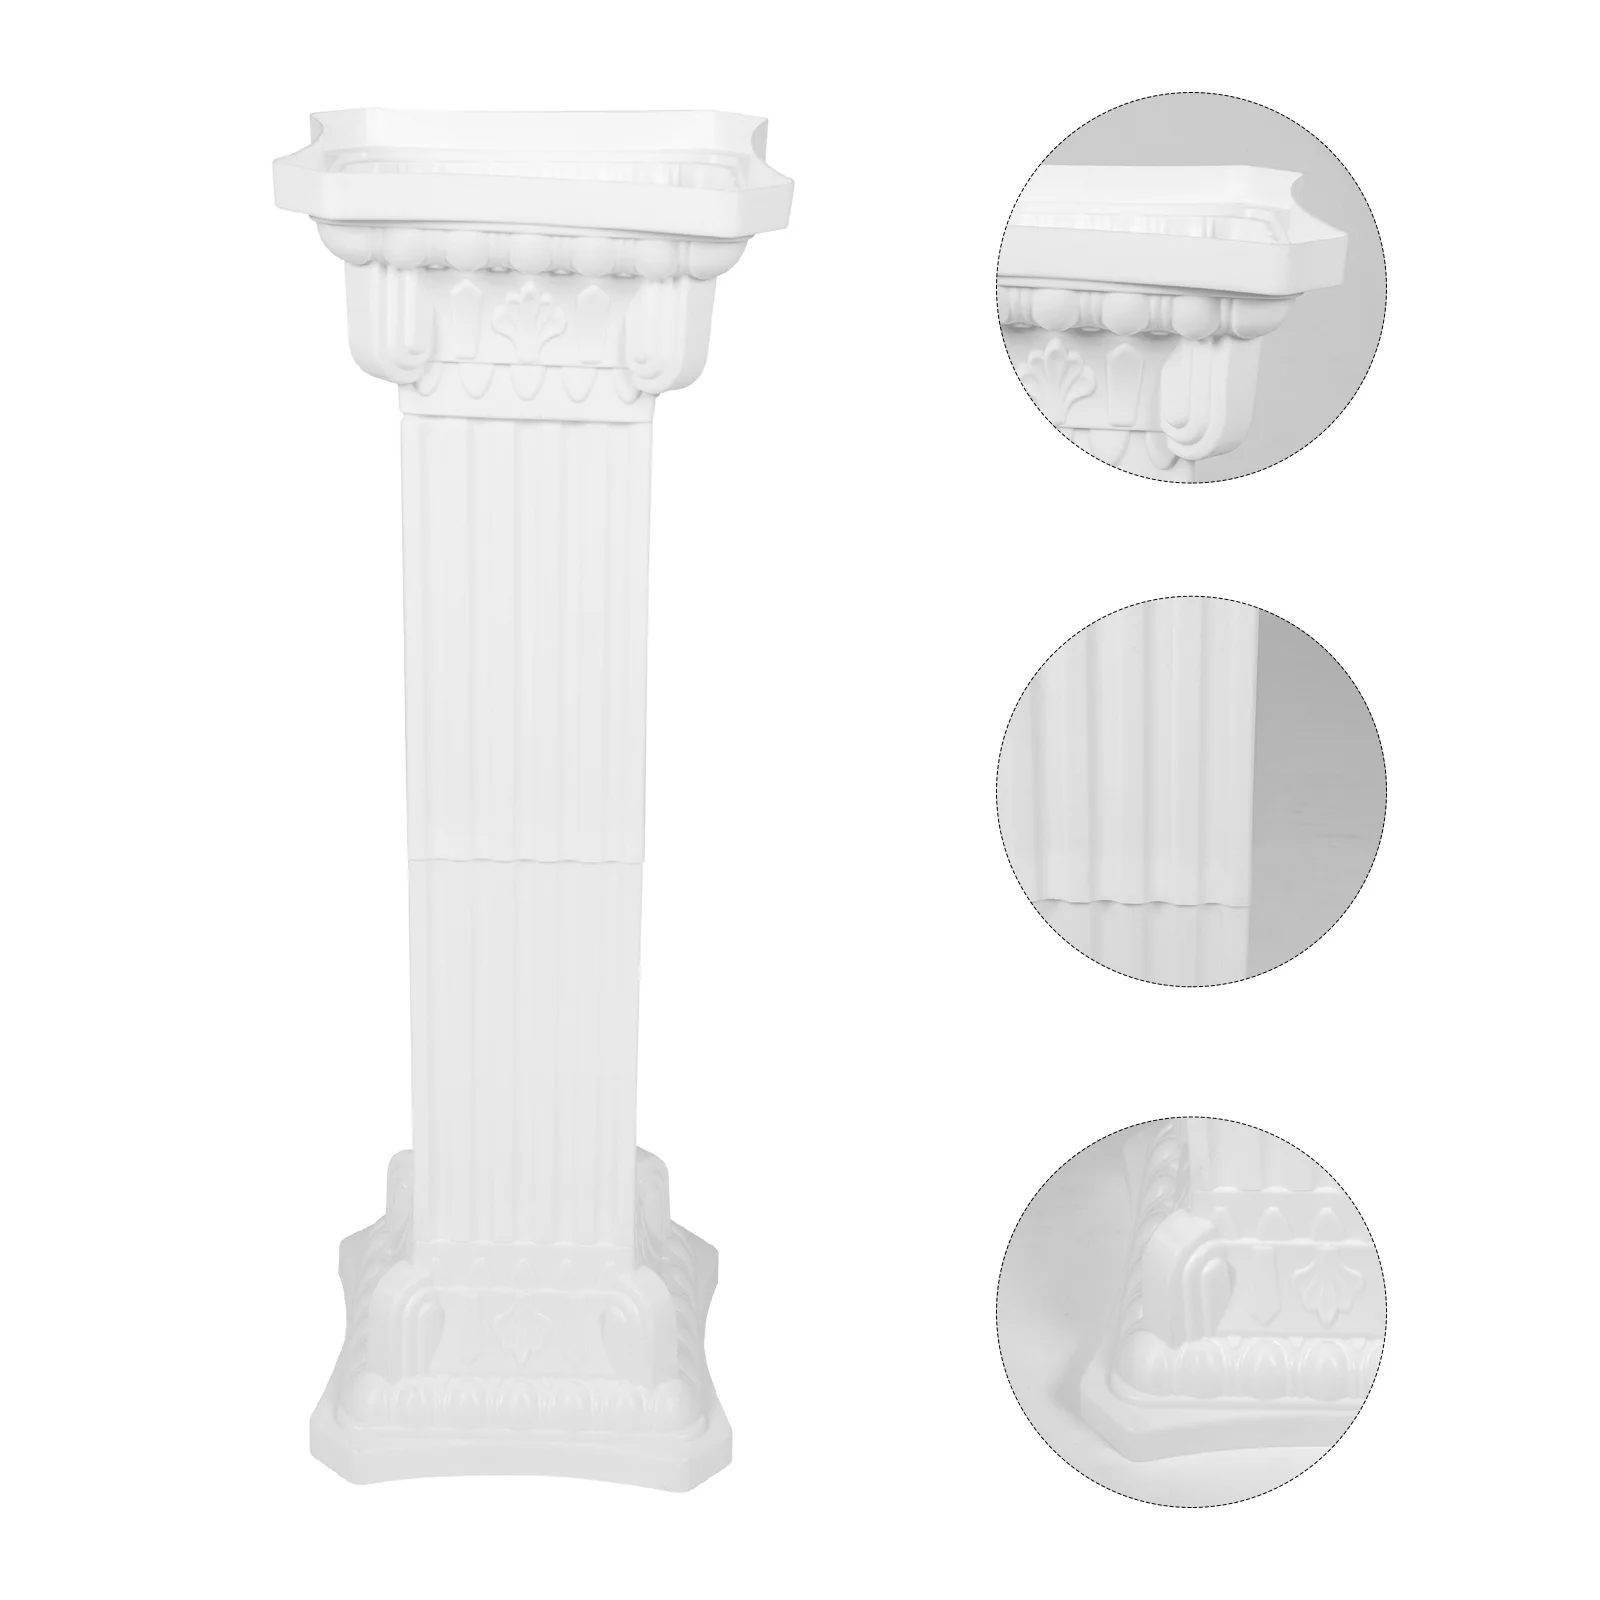 

Roman Column Decorative Party Landscape Prop Artistic Statue Road Pillar Guiding Outdoor Planters Guide Supply